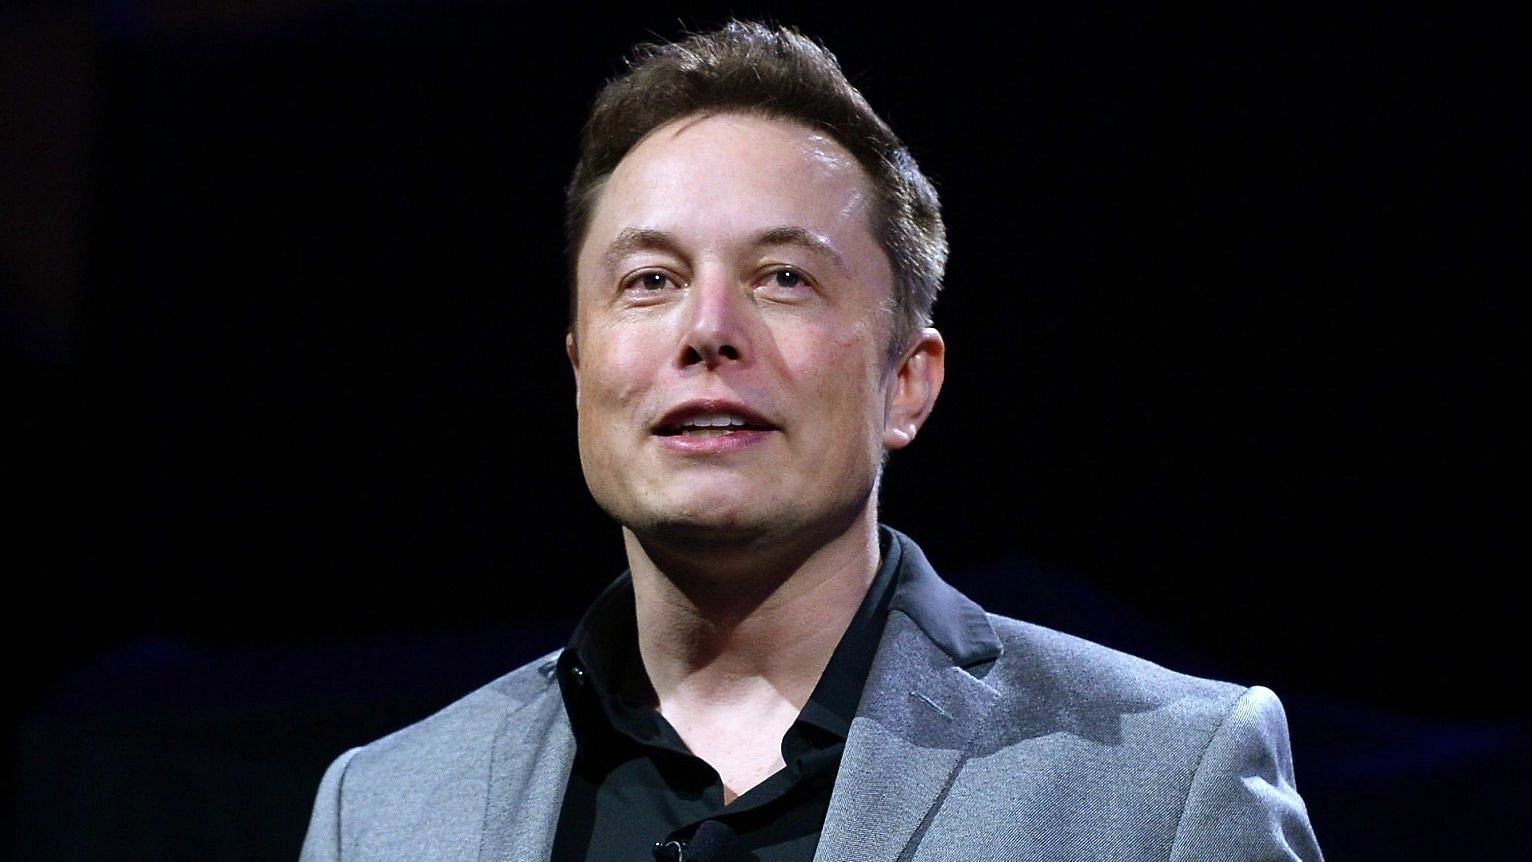 <div class="paragraphs"><p>Elon Musk, the Chief Executive Officer of Tesla Inc. Image used for representative purposes.&nbsp;</p></div>